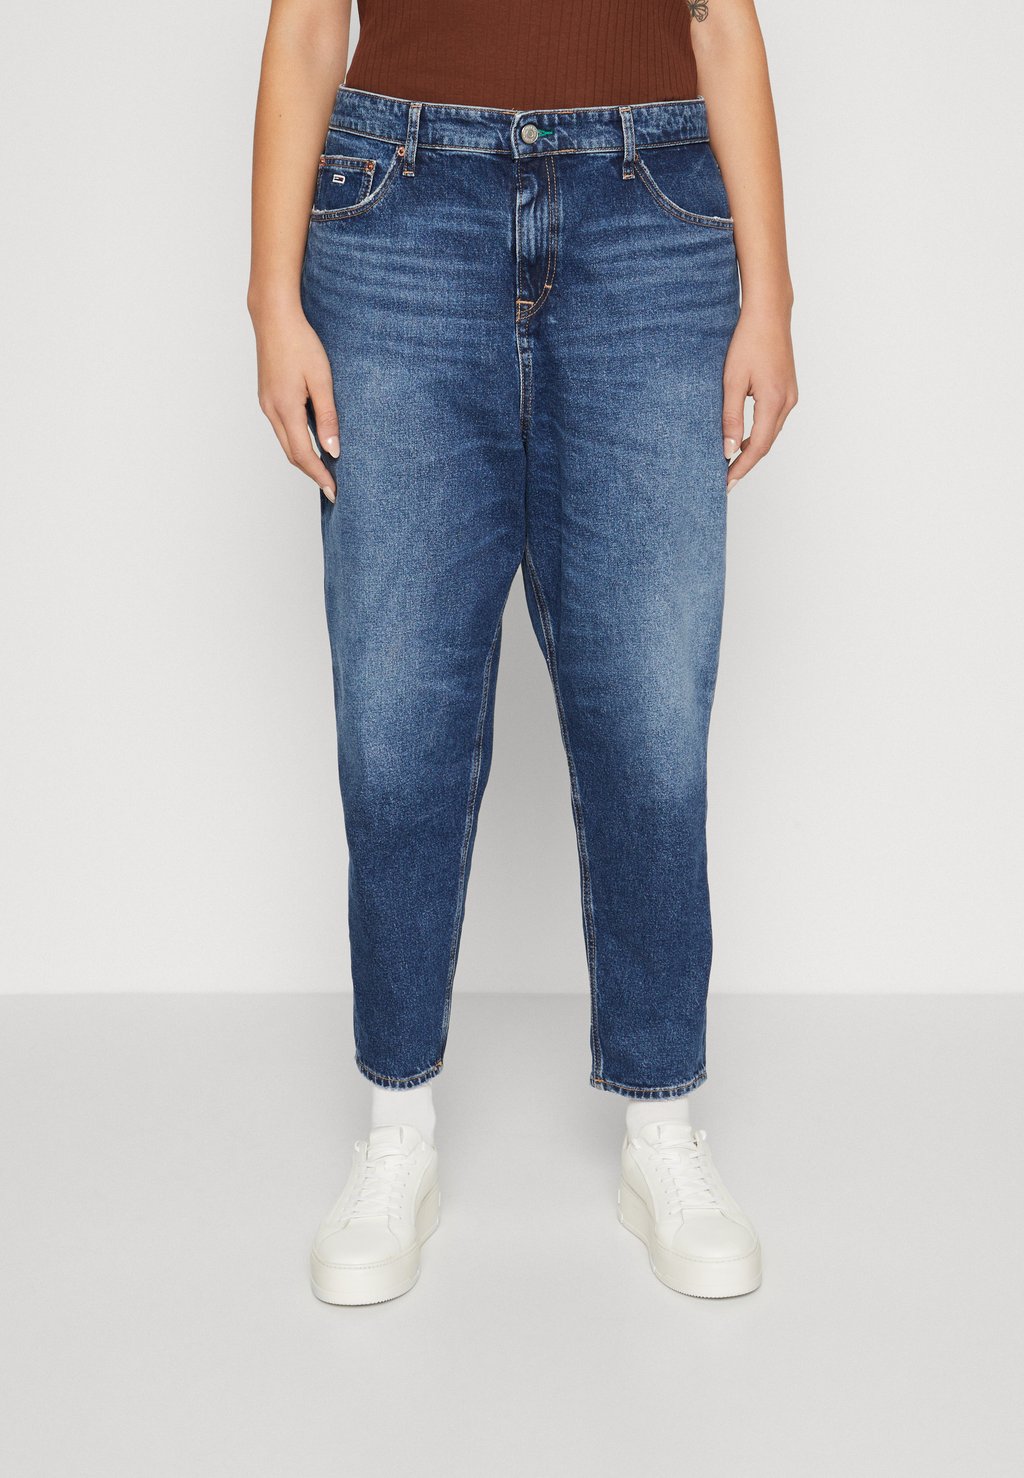 Джинсы свободного кроя Tommy Jeans Curve MOM, цвет denim dark джинсы свободного кроя tommy jeans curve mom цвет denim dark